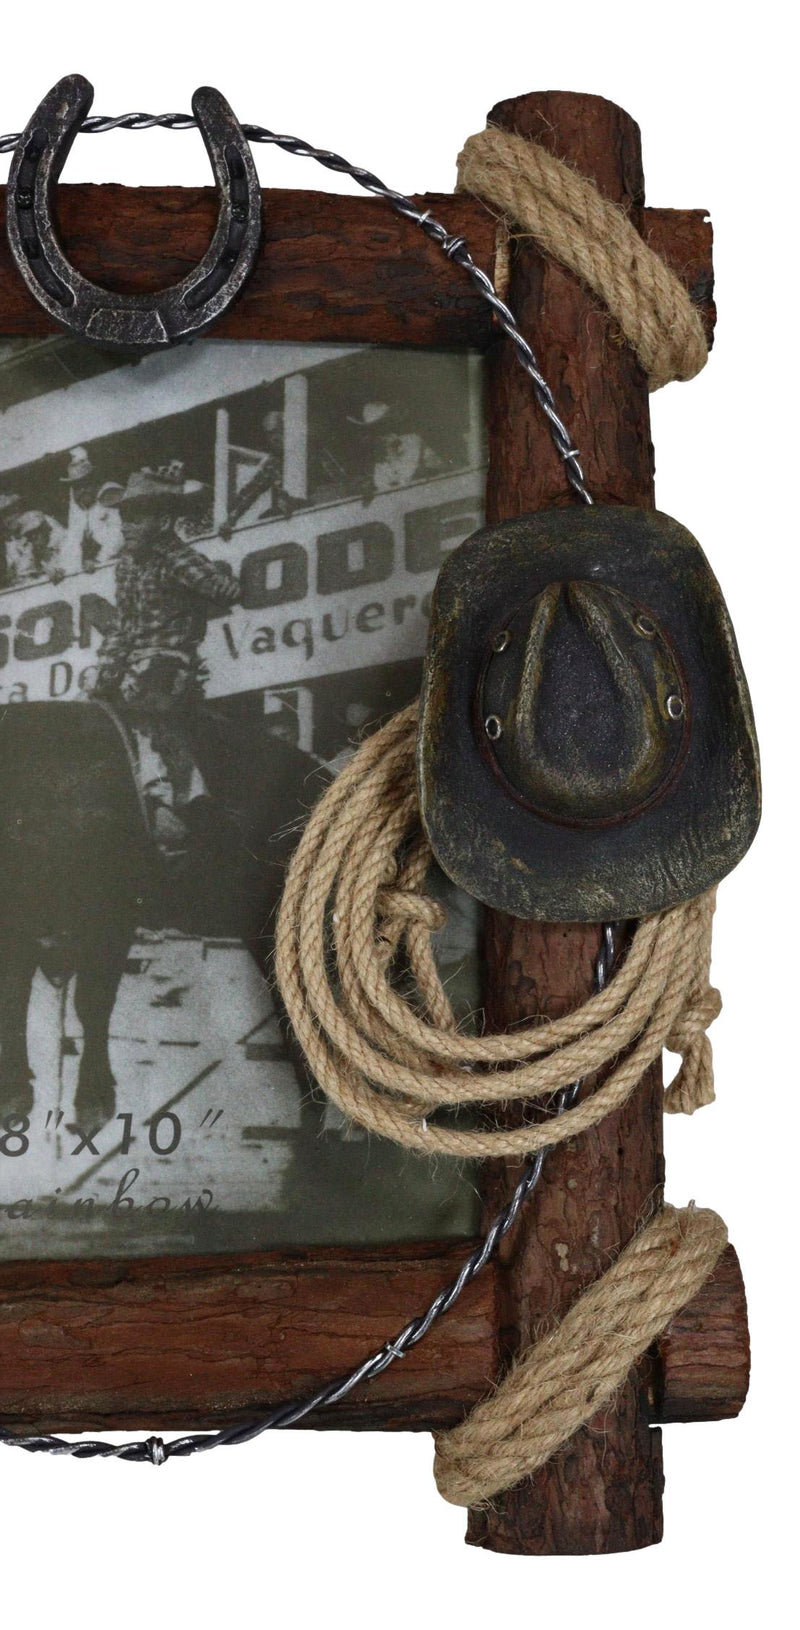 Country Rustic Cowboy Shotgun Ropes Hat Horseshoe Barnwood Picture Frame 8x10